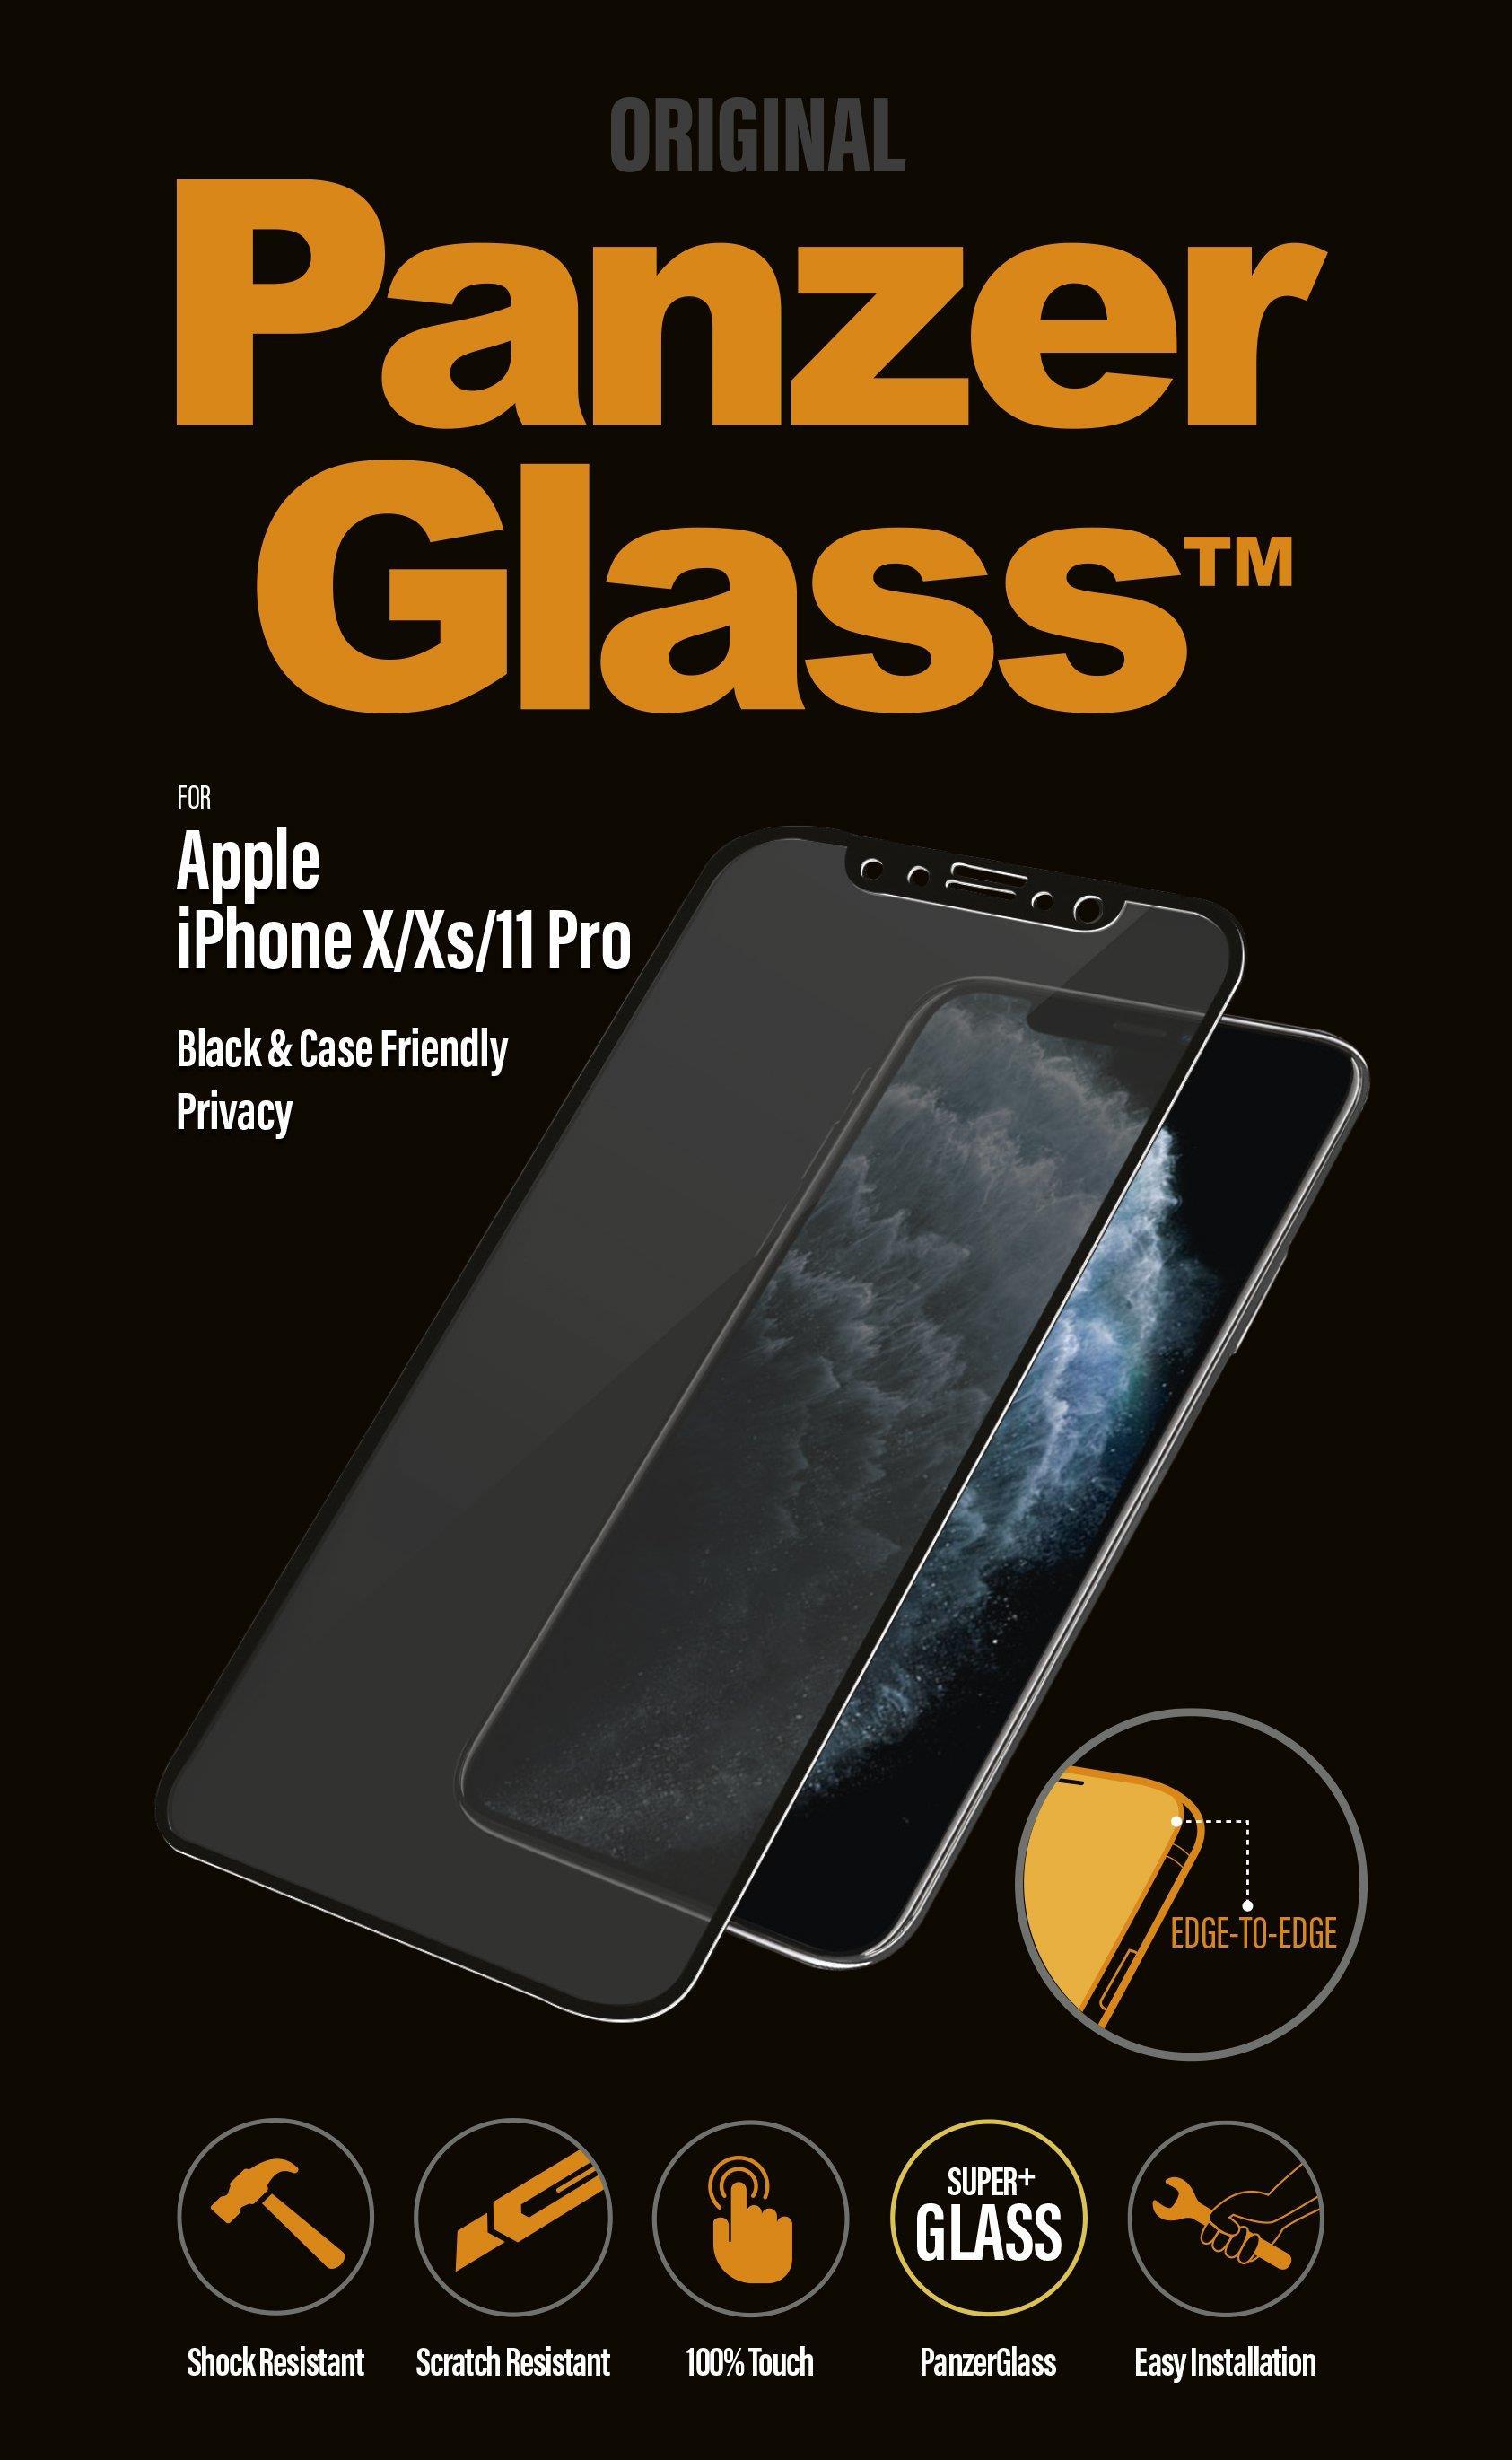 PANZERGLASS Privacy Case Friendly Apple NEW iPhone 5.8, Black